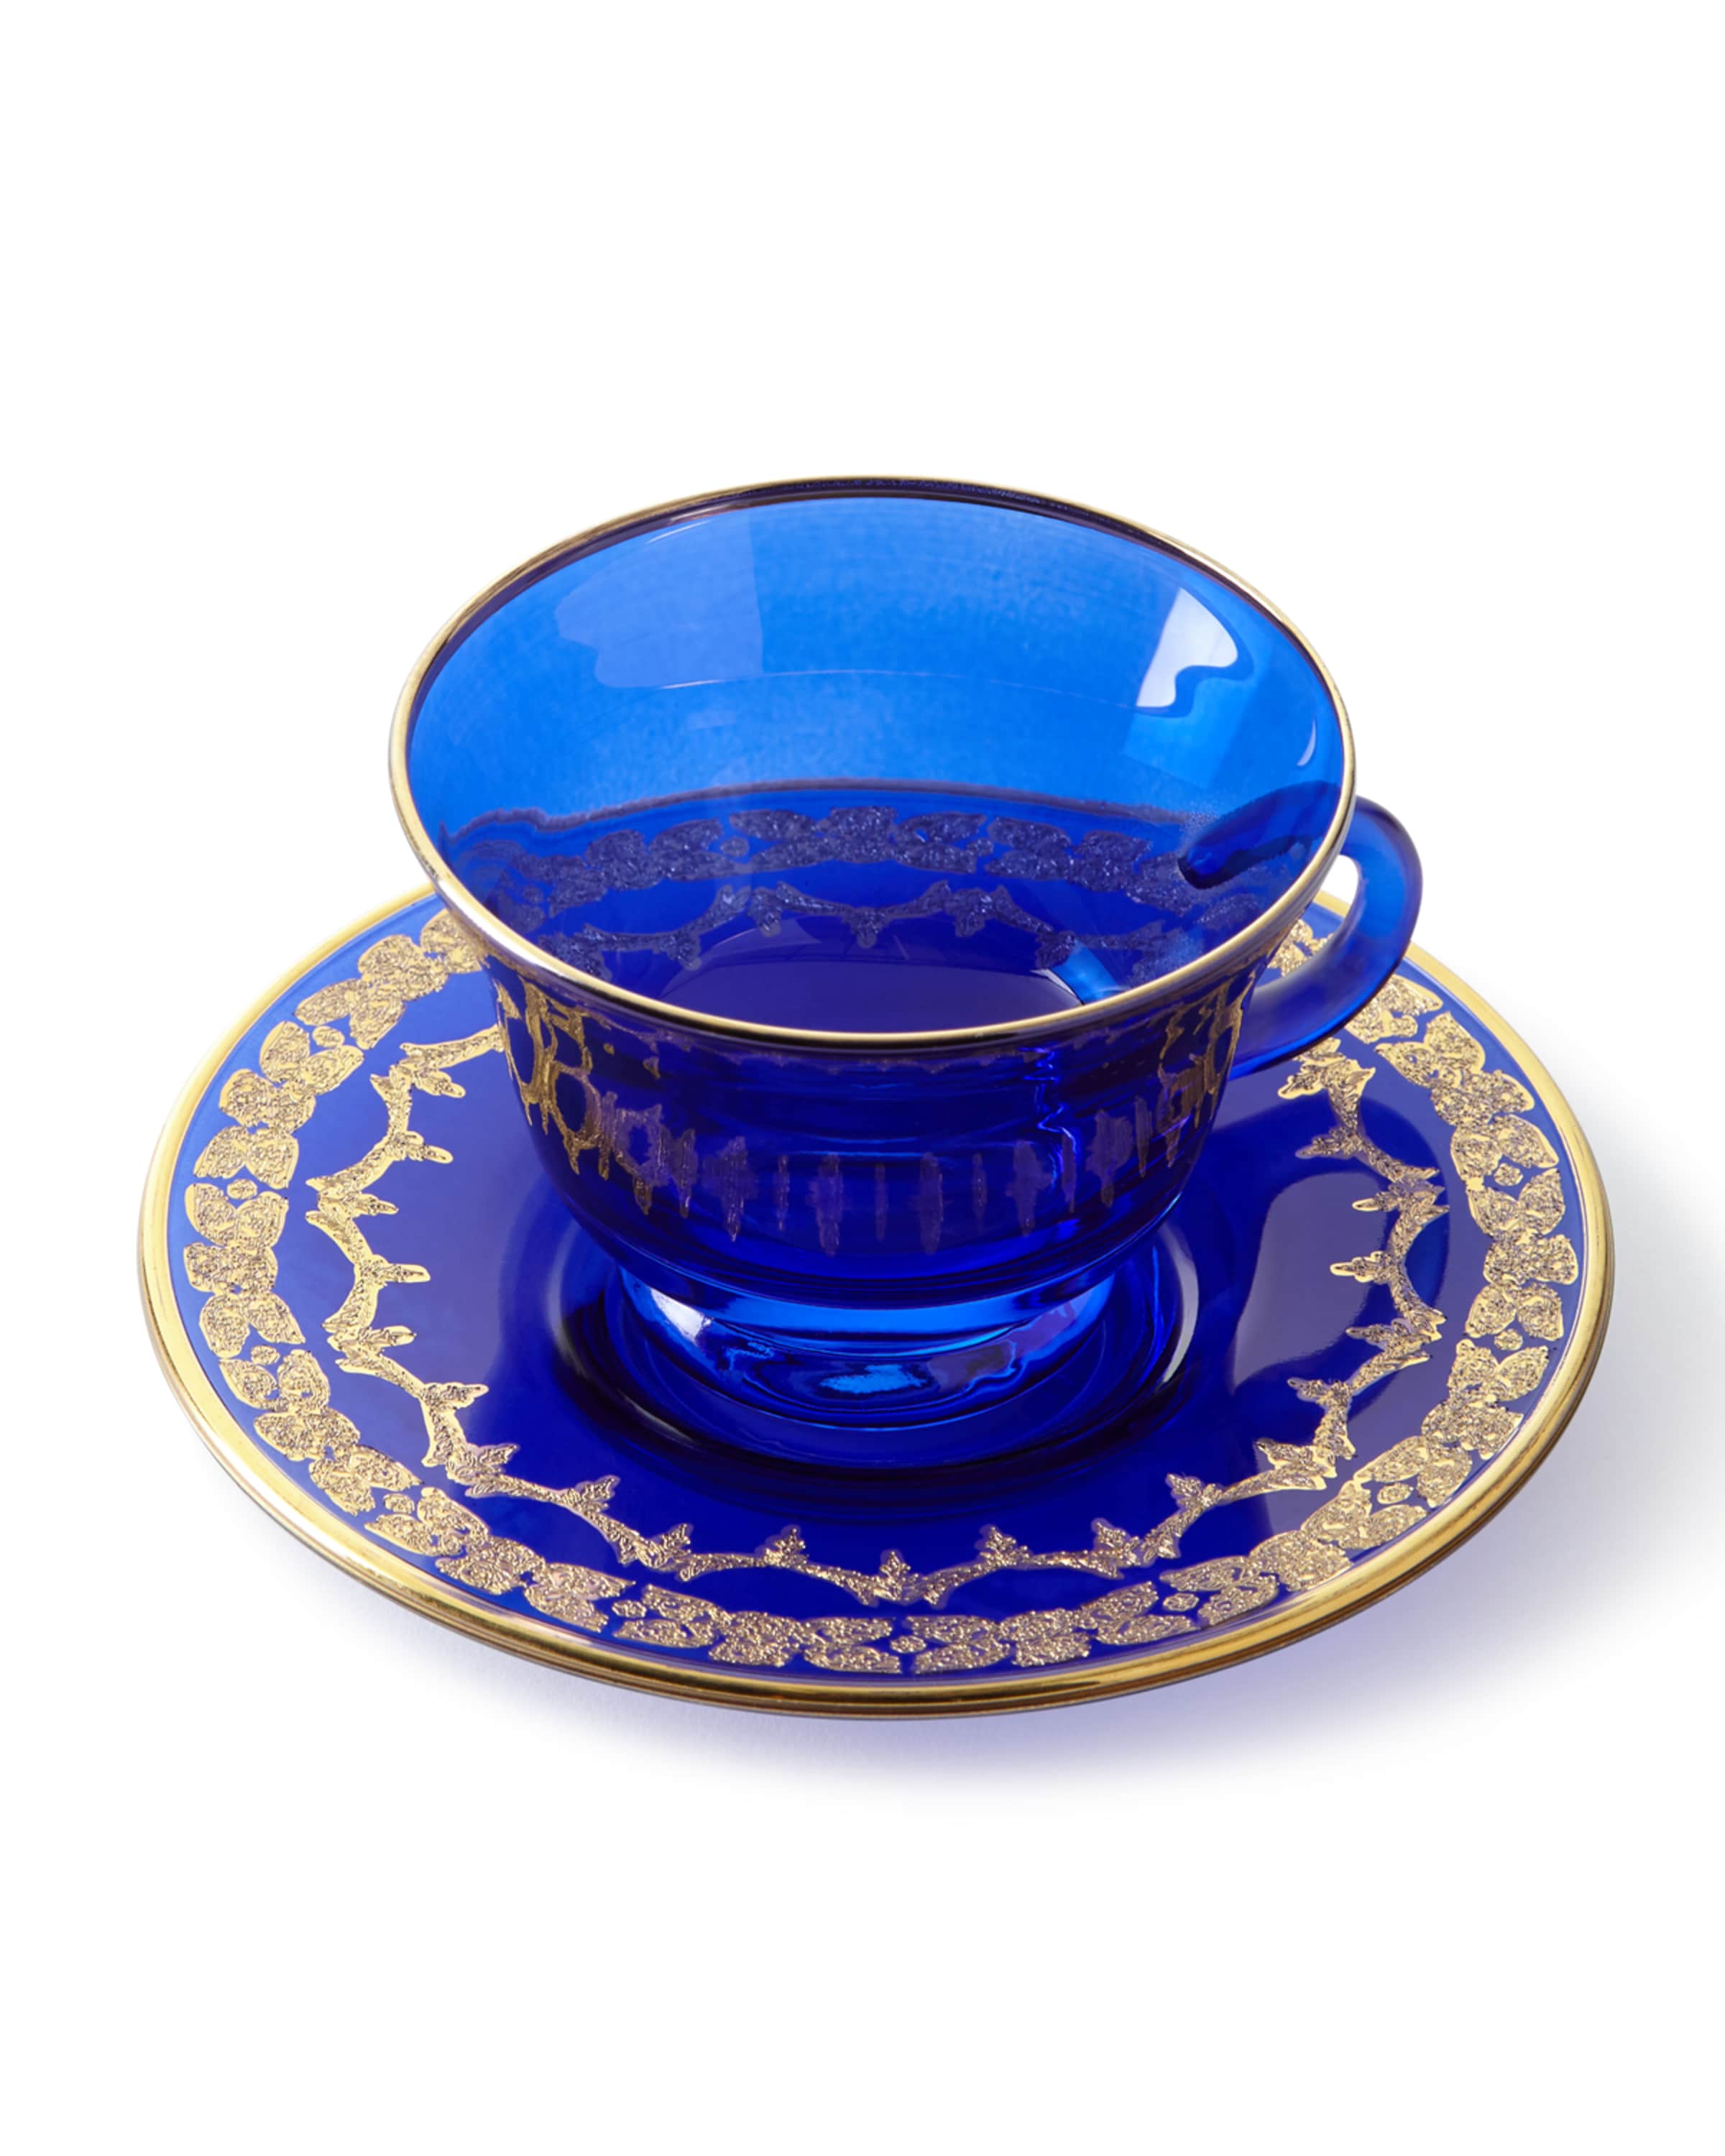 Neiman Marcus Blue Oro Bello Teacups & Saucers, Set of 4